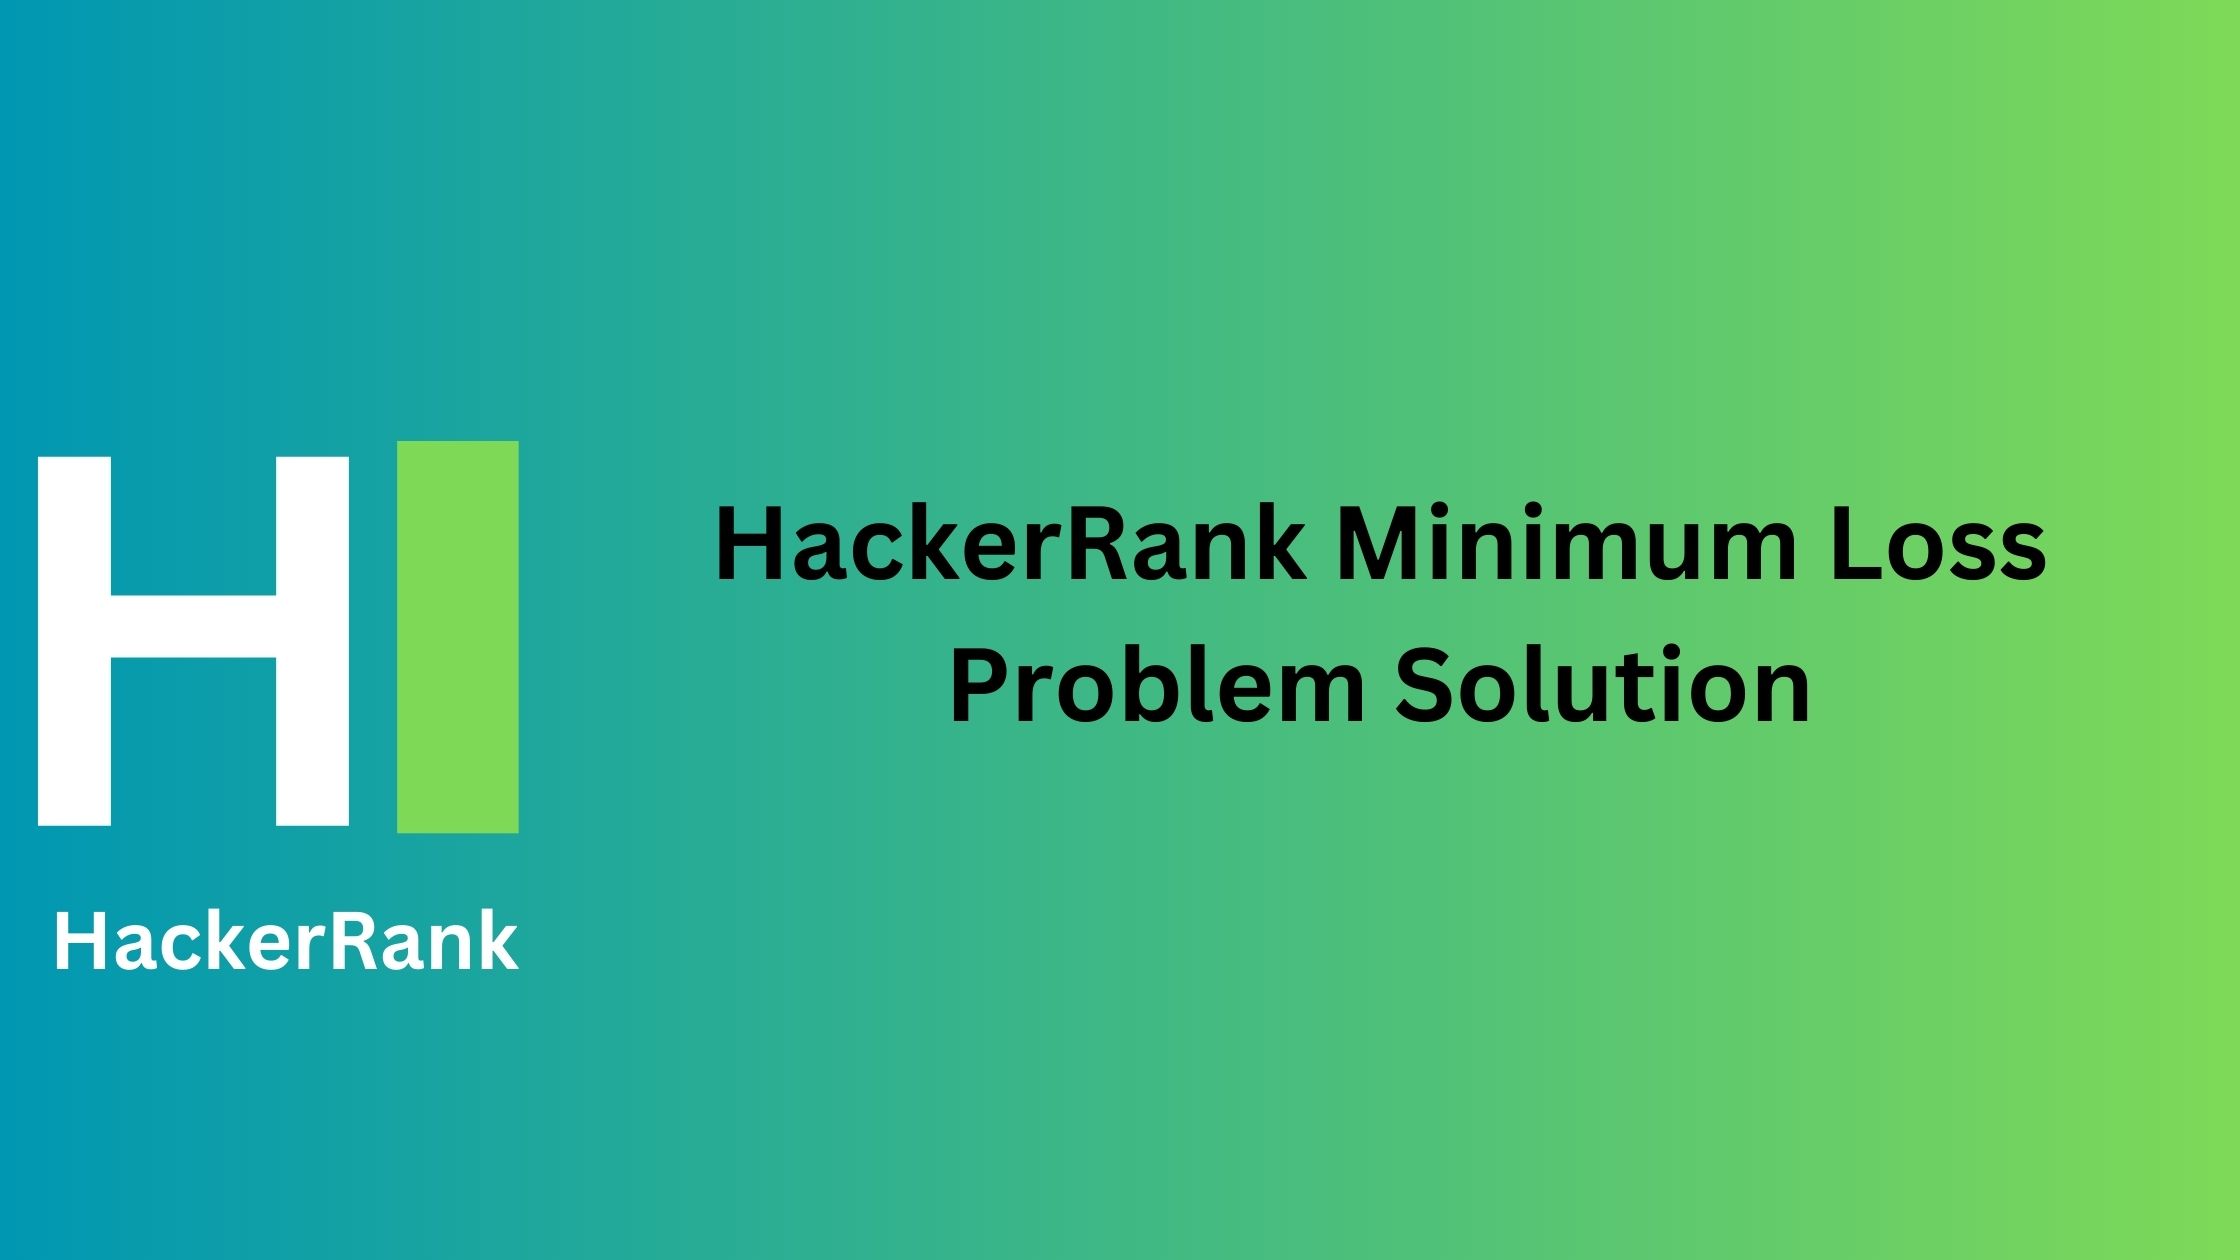 HackerRank Minimum Loss Problem Solution